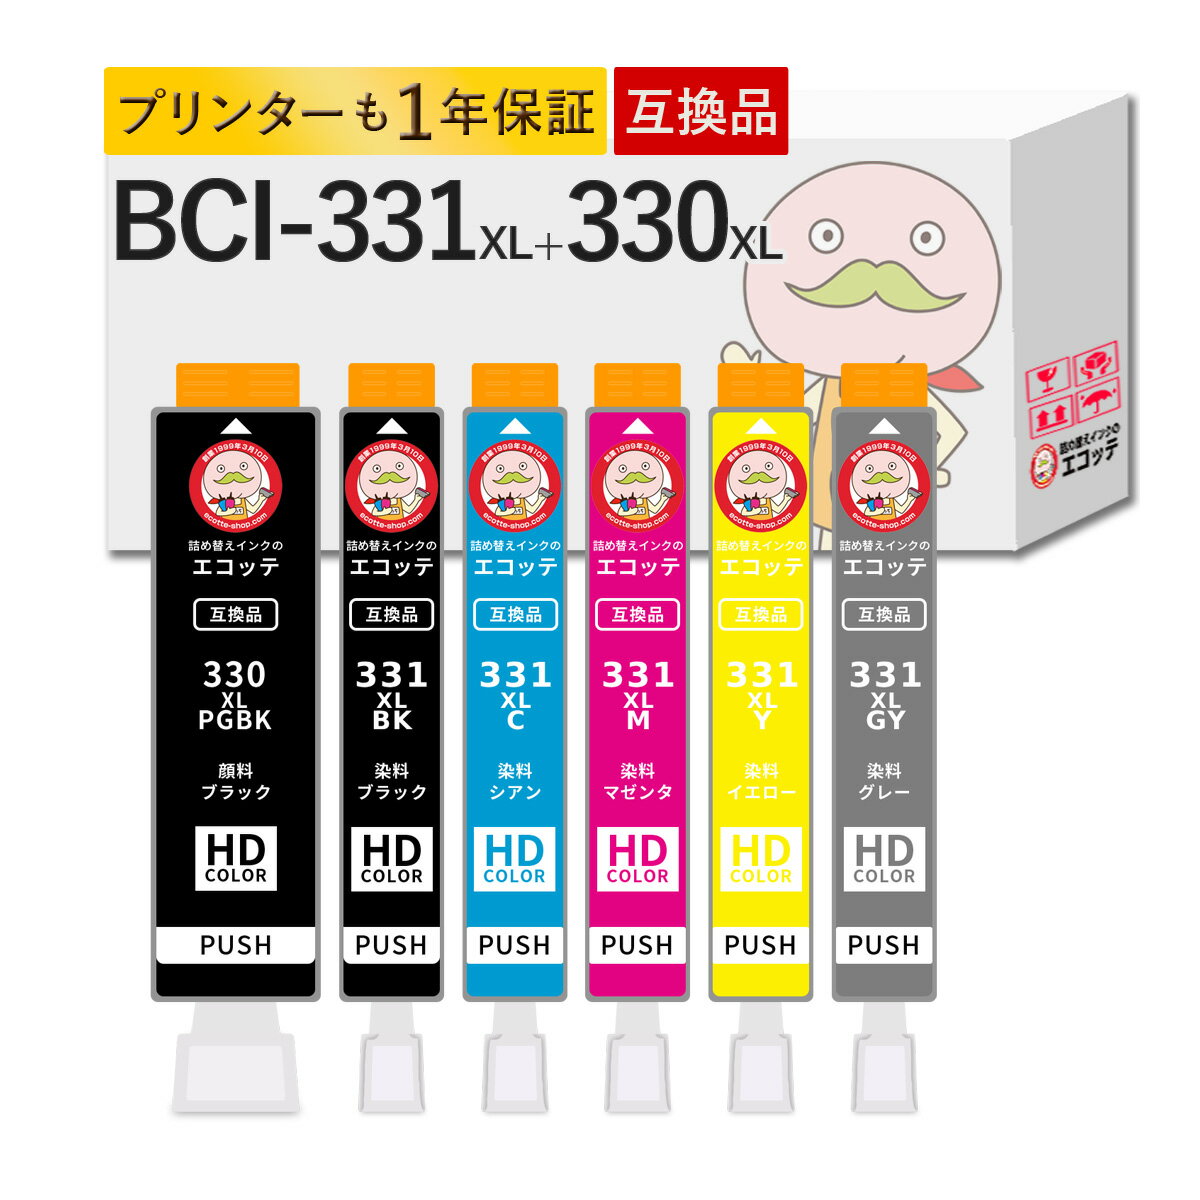 BCI-331XL BCI-330XL Canon ( キヤノン / キャノン )用 大容量 増量 6色 互換インクカートリッジ ┃ BCI-331XL+330XL/6MP プリンターインク キャノン ts8530 インク ts8630 インク ts8730 インク TS8700 インク TS8600 インク TS8500 インク bci331 bci330